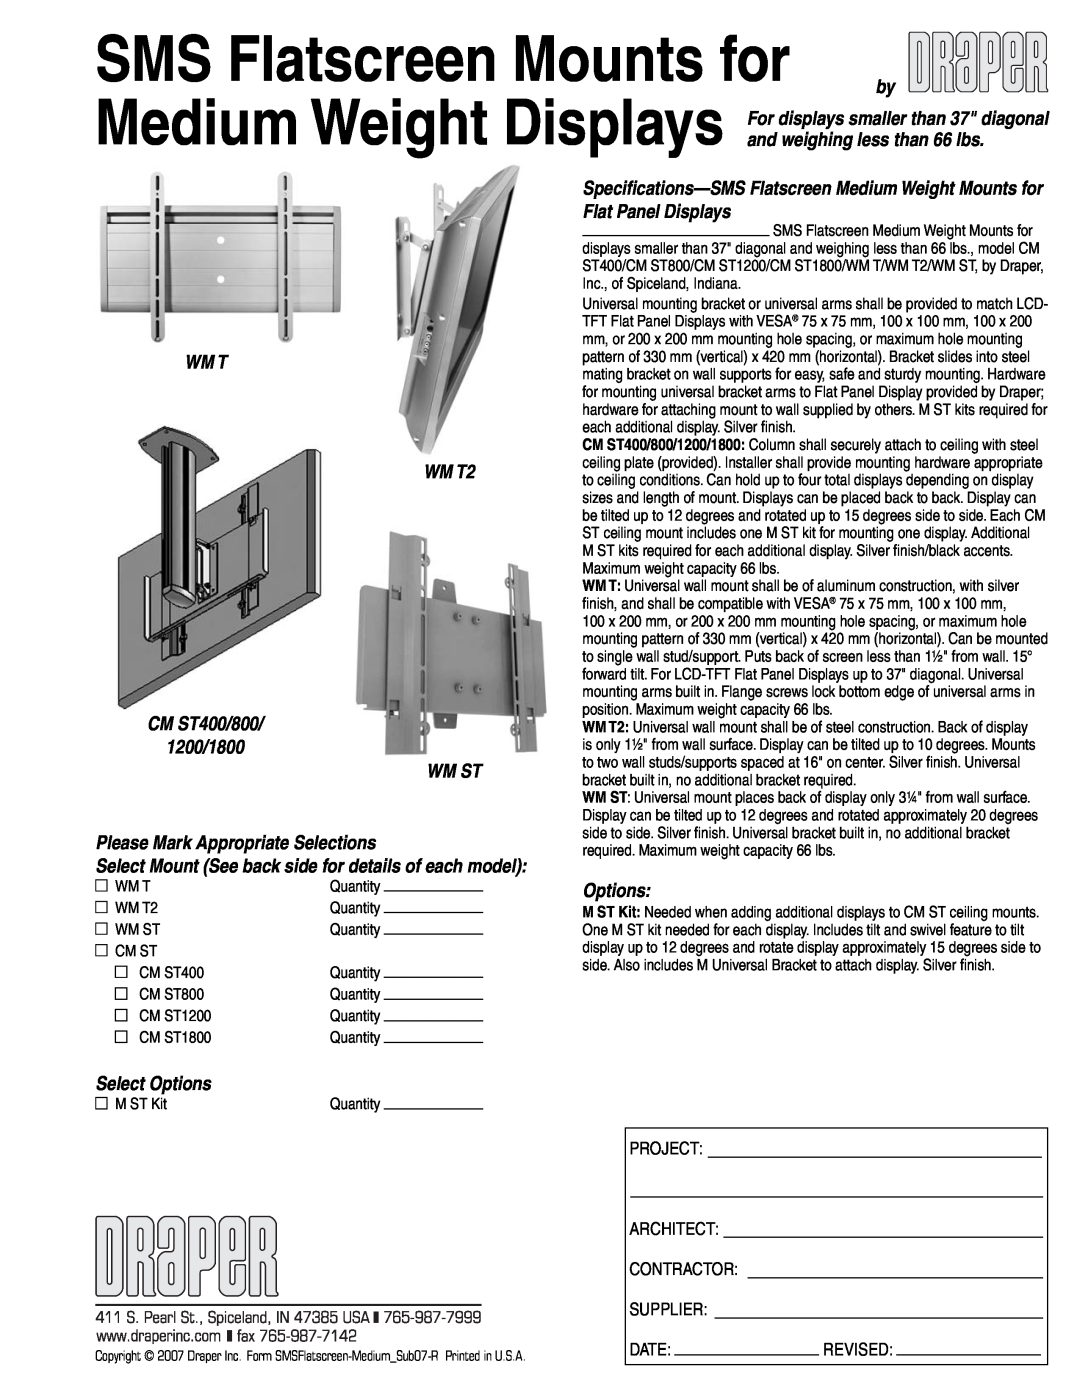 Draper WMT specifications Flat Panel Displays, WM T WM T2 CM ST400/800 1200/1800 WM ST, Please Mark Appropriate Selections 